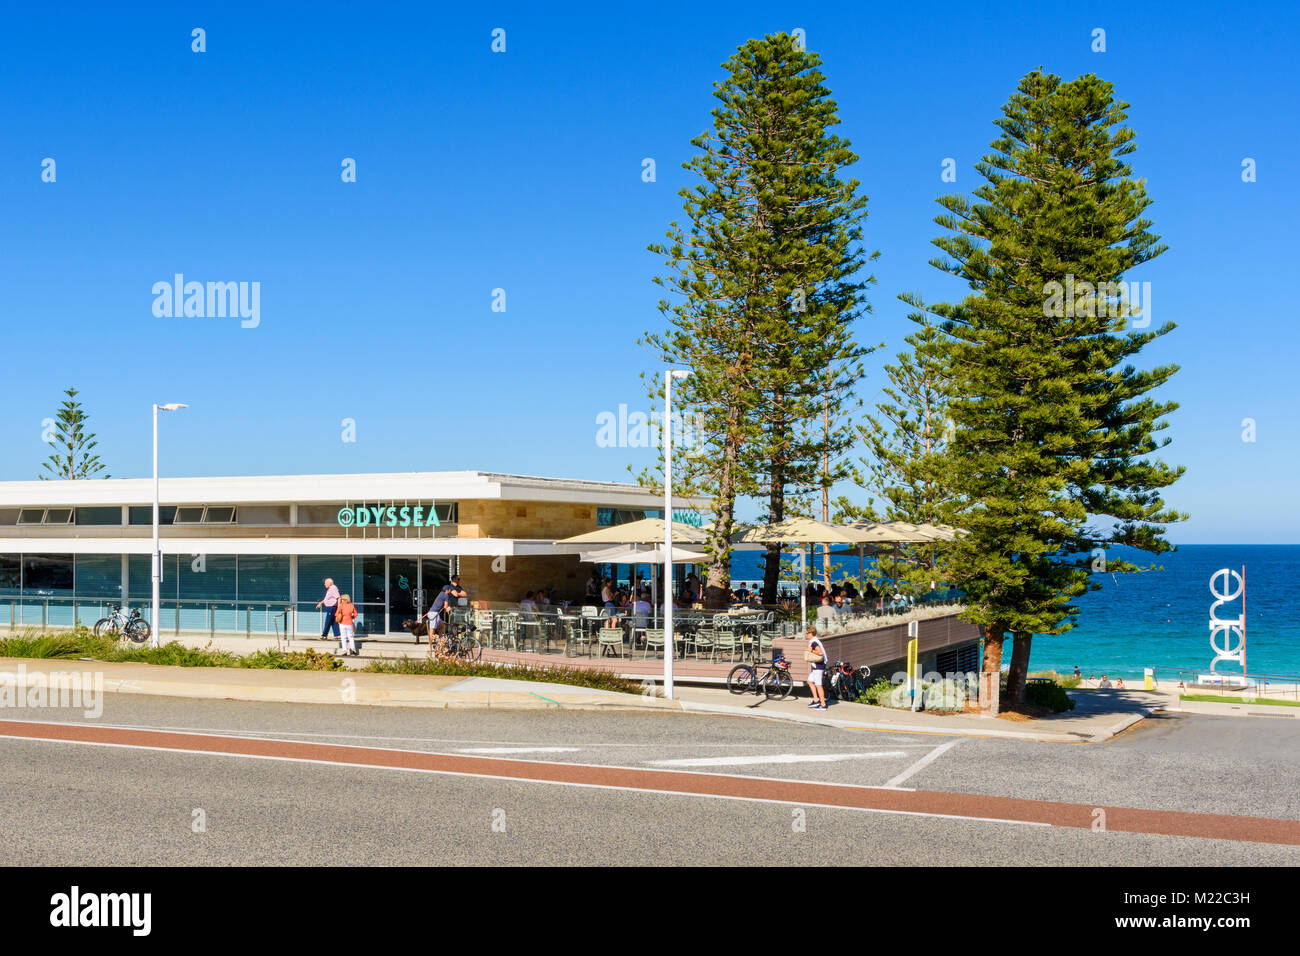 Odyssea Beach Cafe at City Beach, Perth, Western Australia Stock Photo